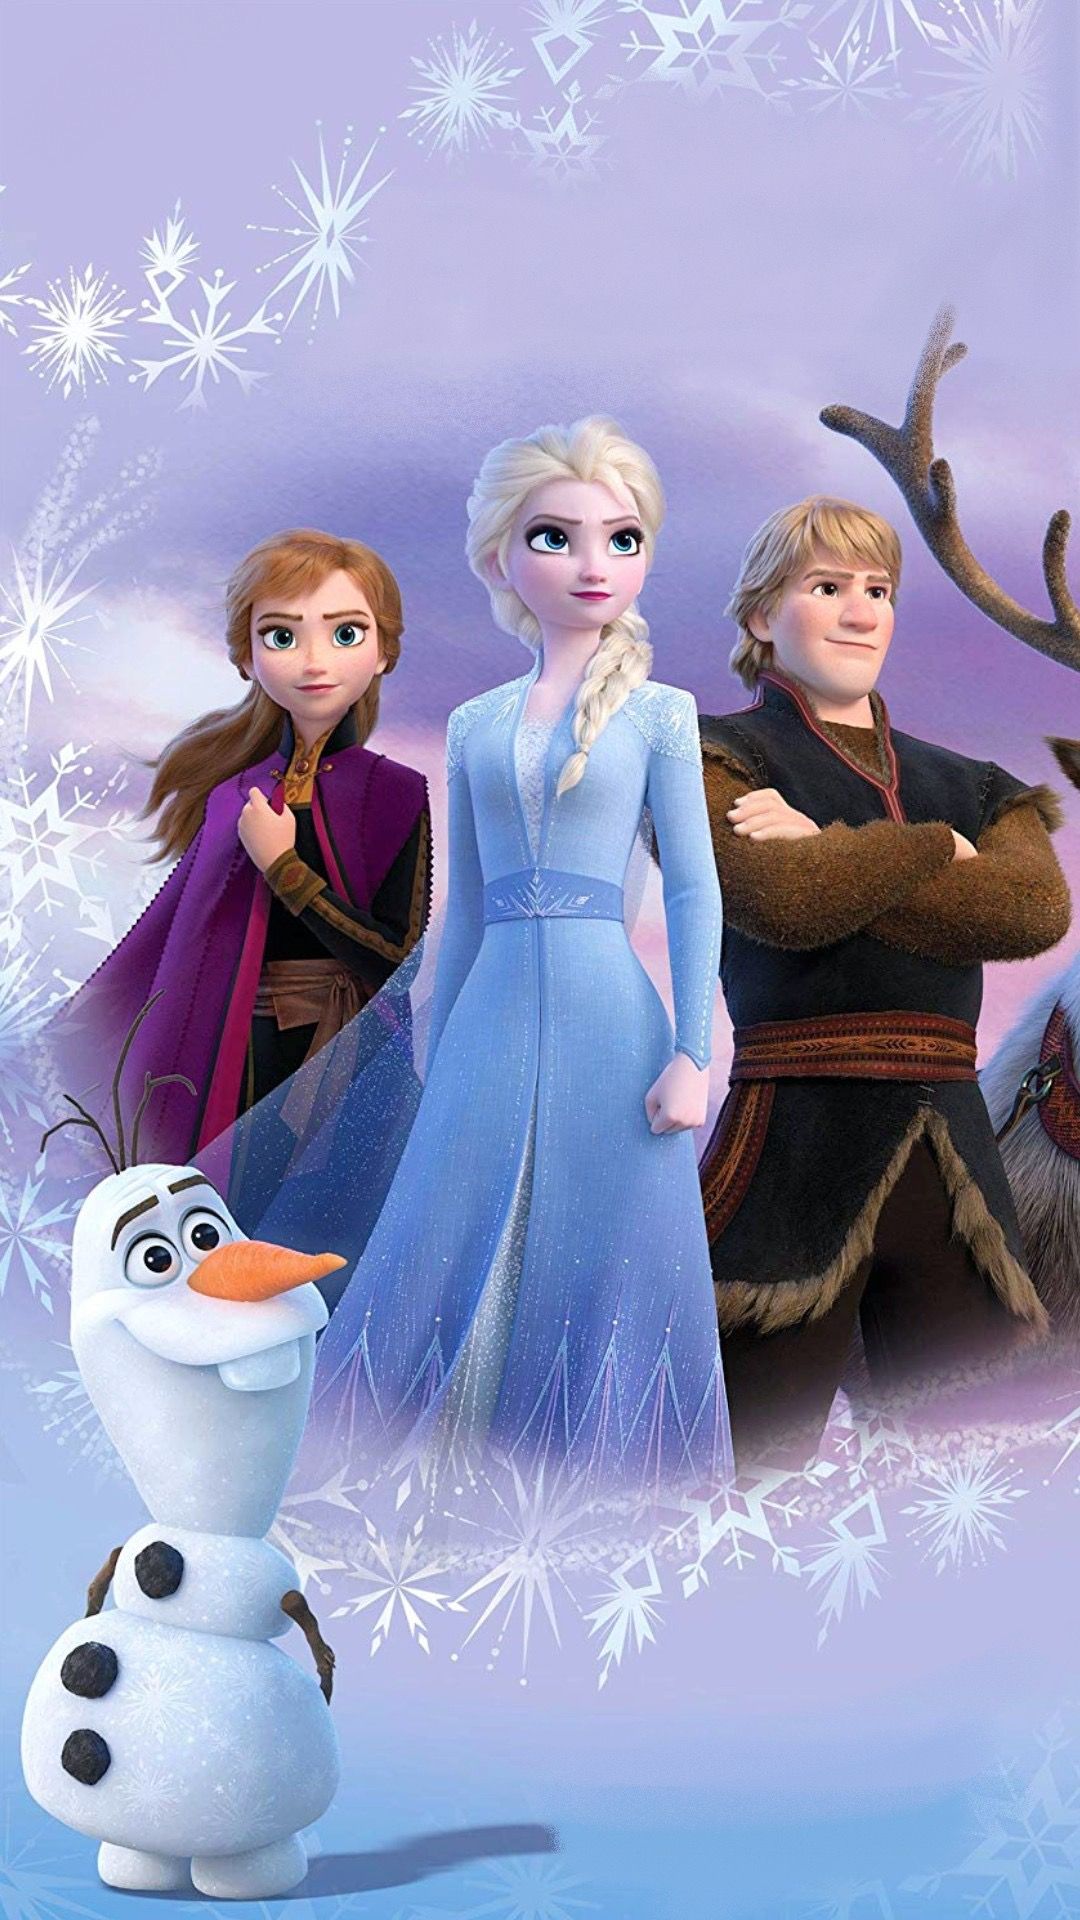 Frohana. Frozen disney movie, Frozen picture, Disney princess frozen